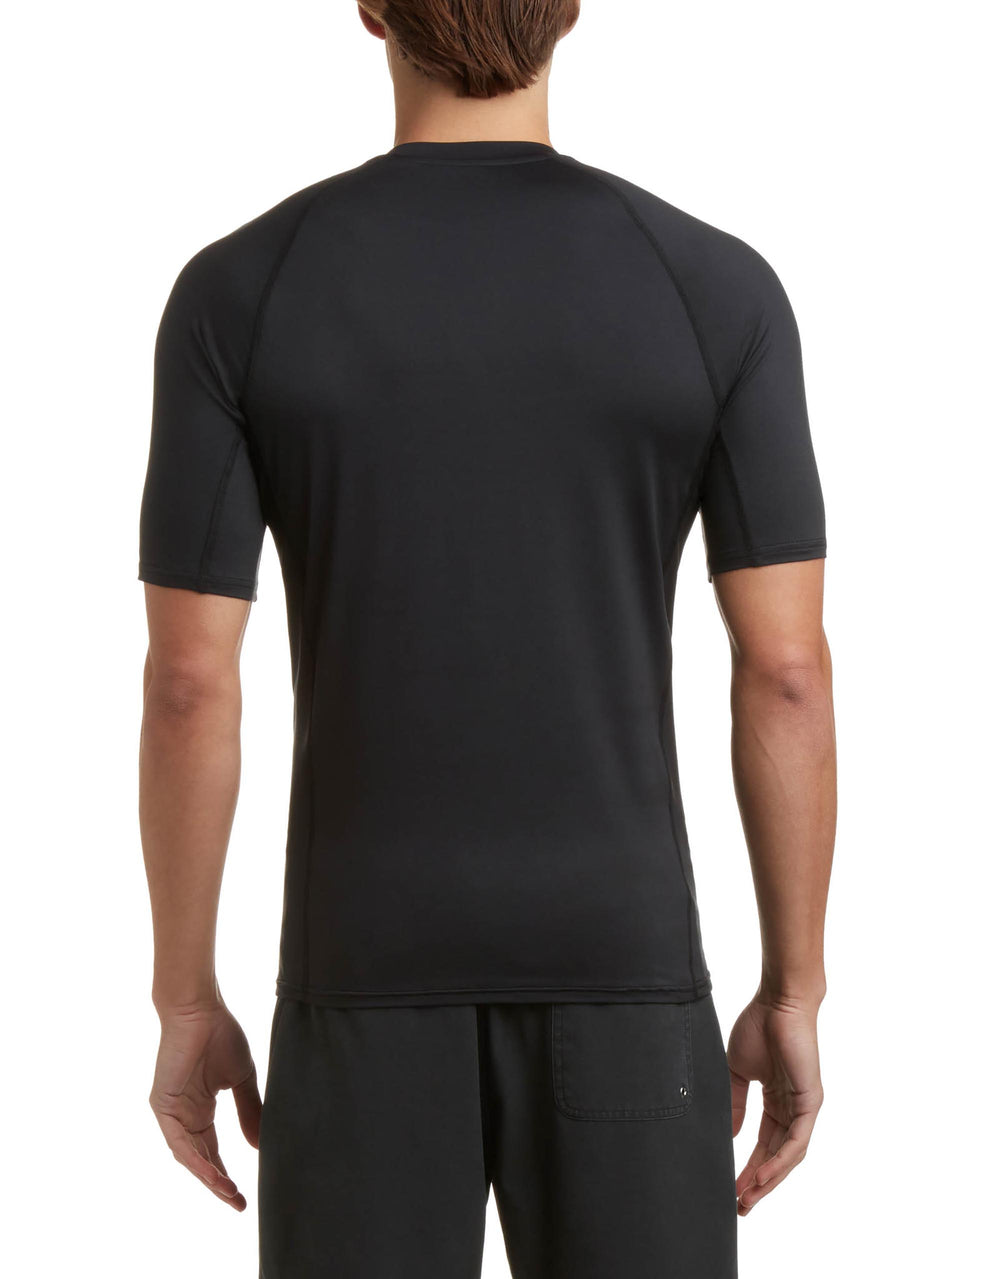 Body Glove Men's Sun Shirt - UPF 50 Short Sleeve Quick Dry Sun Protection  T-Shirt S-XL